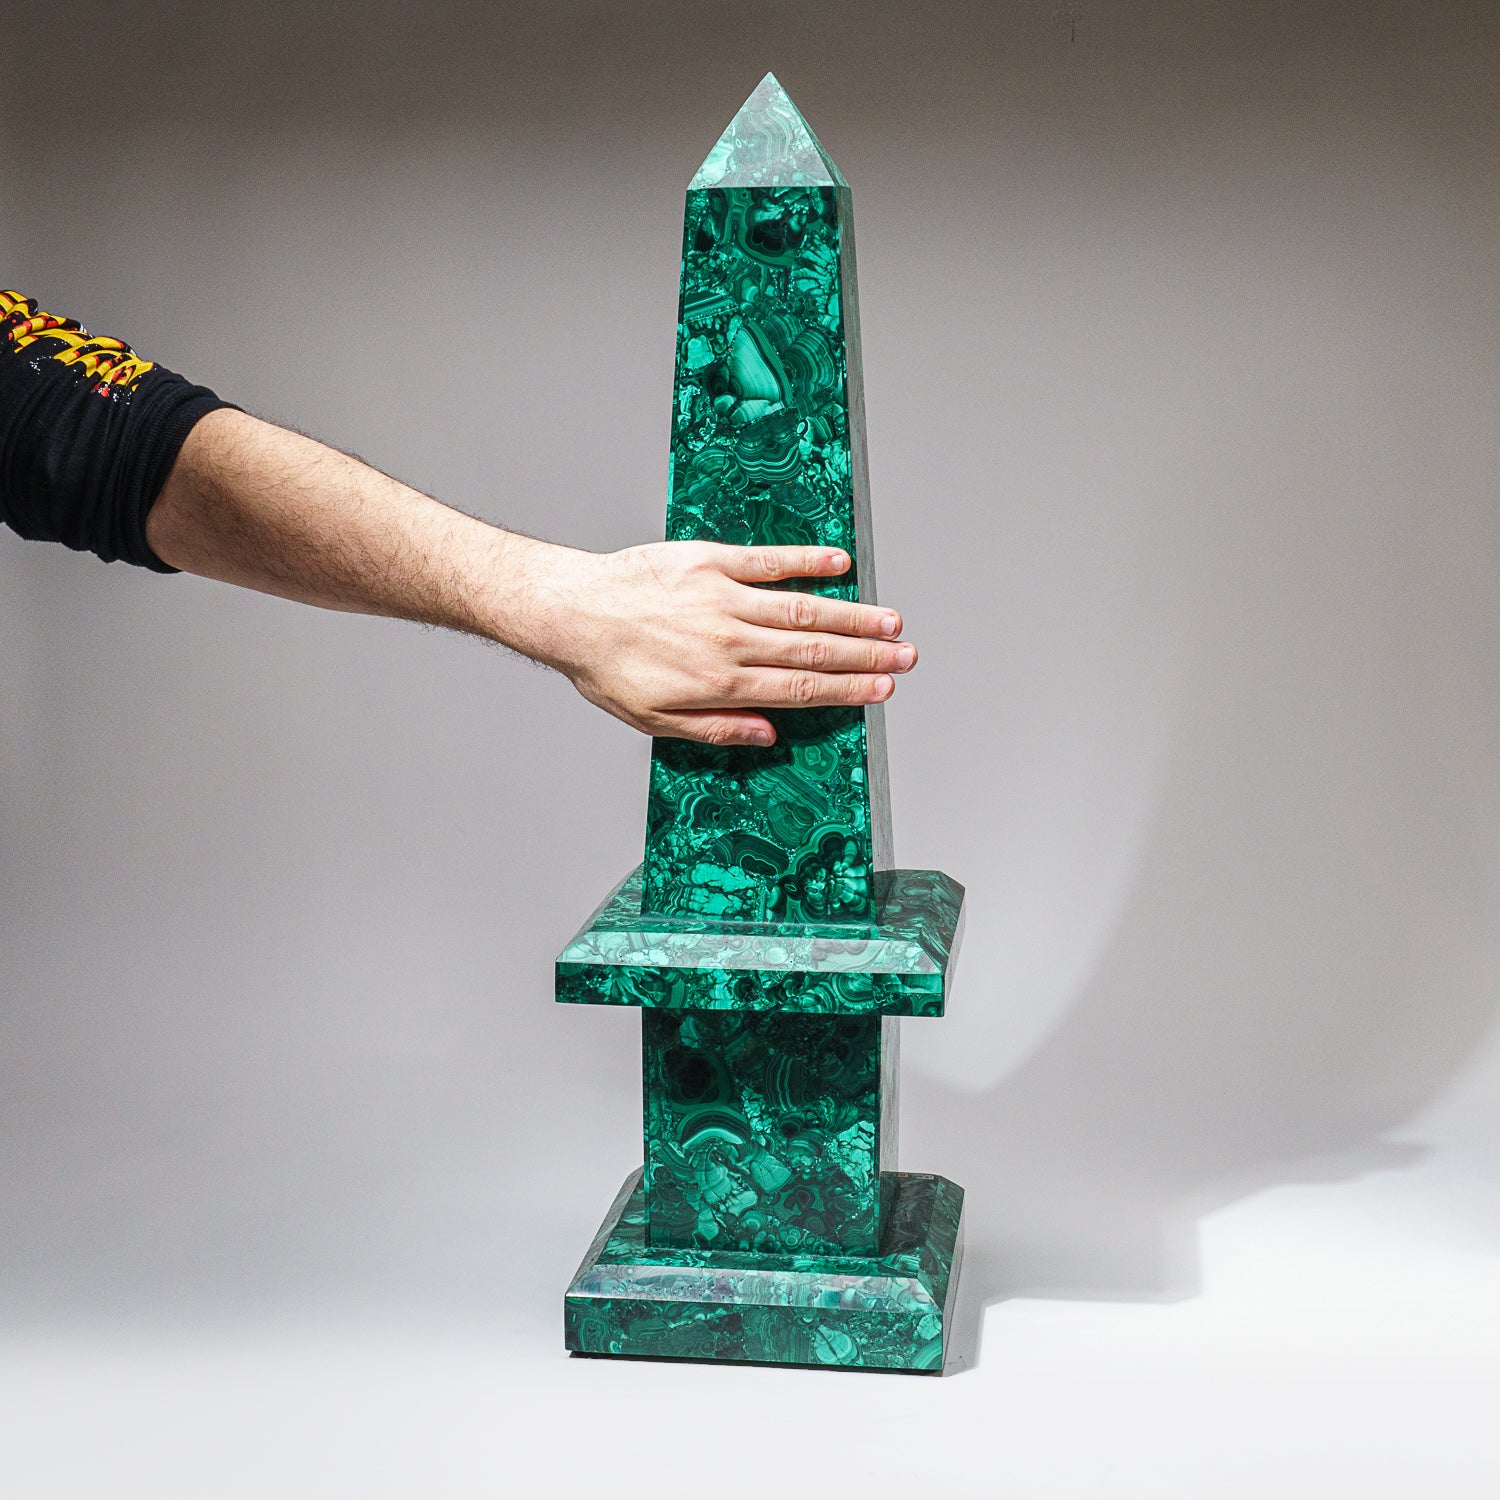 Large Genuine Polished Malachite Obelisk (16.5 lbs)